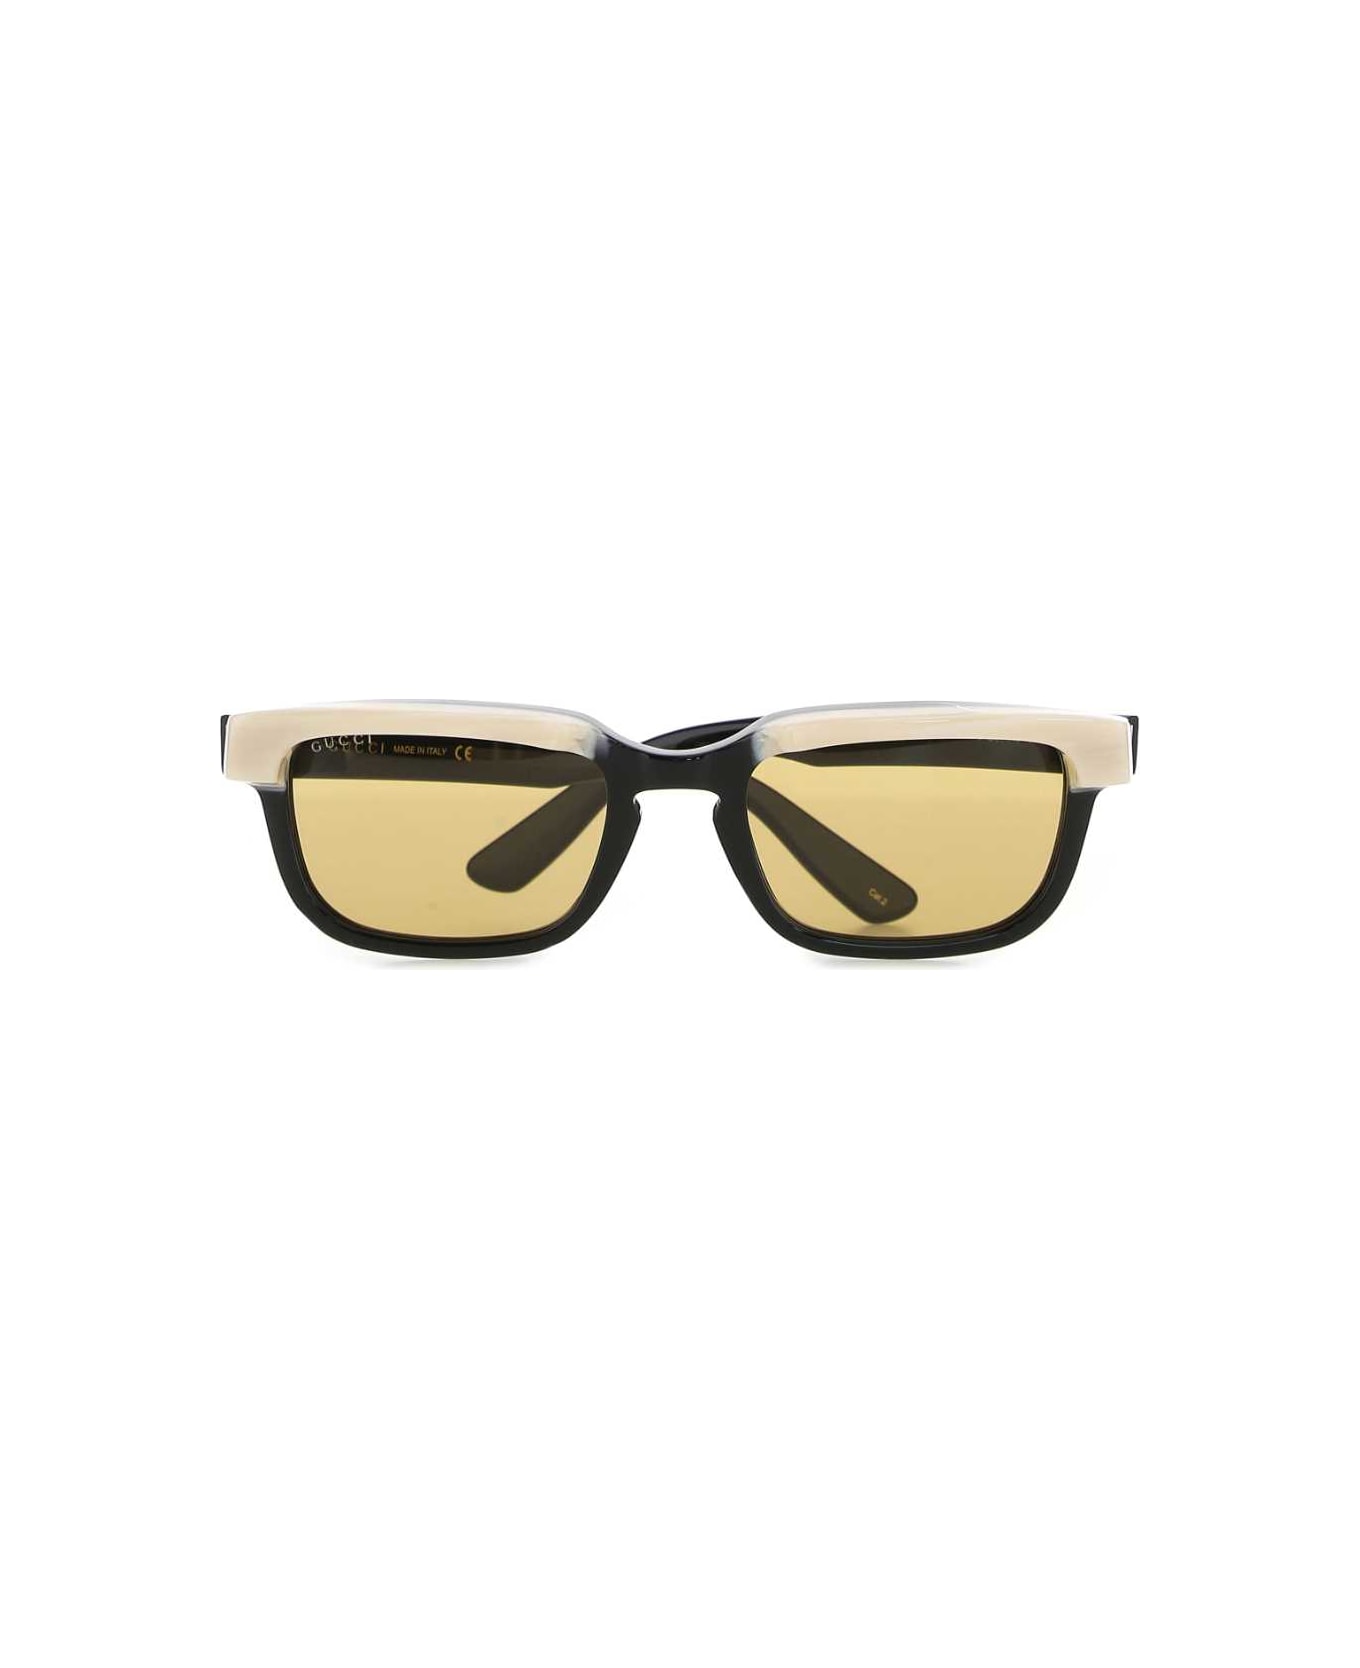 Gucci Black Acetate Sunglasses - 1070